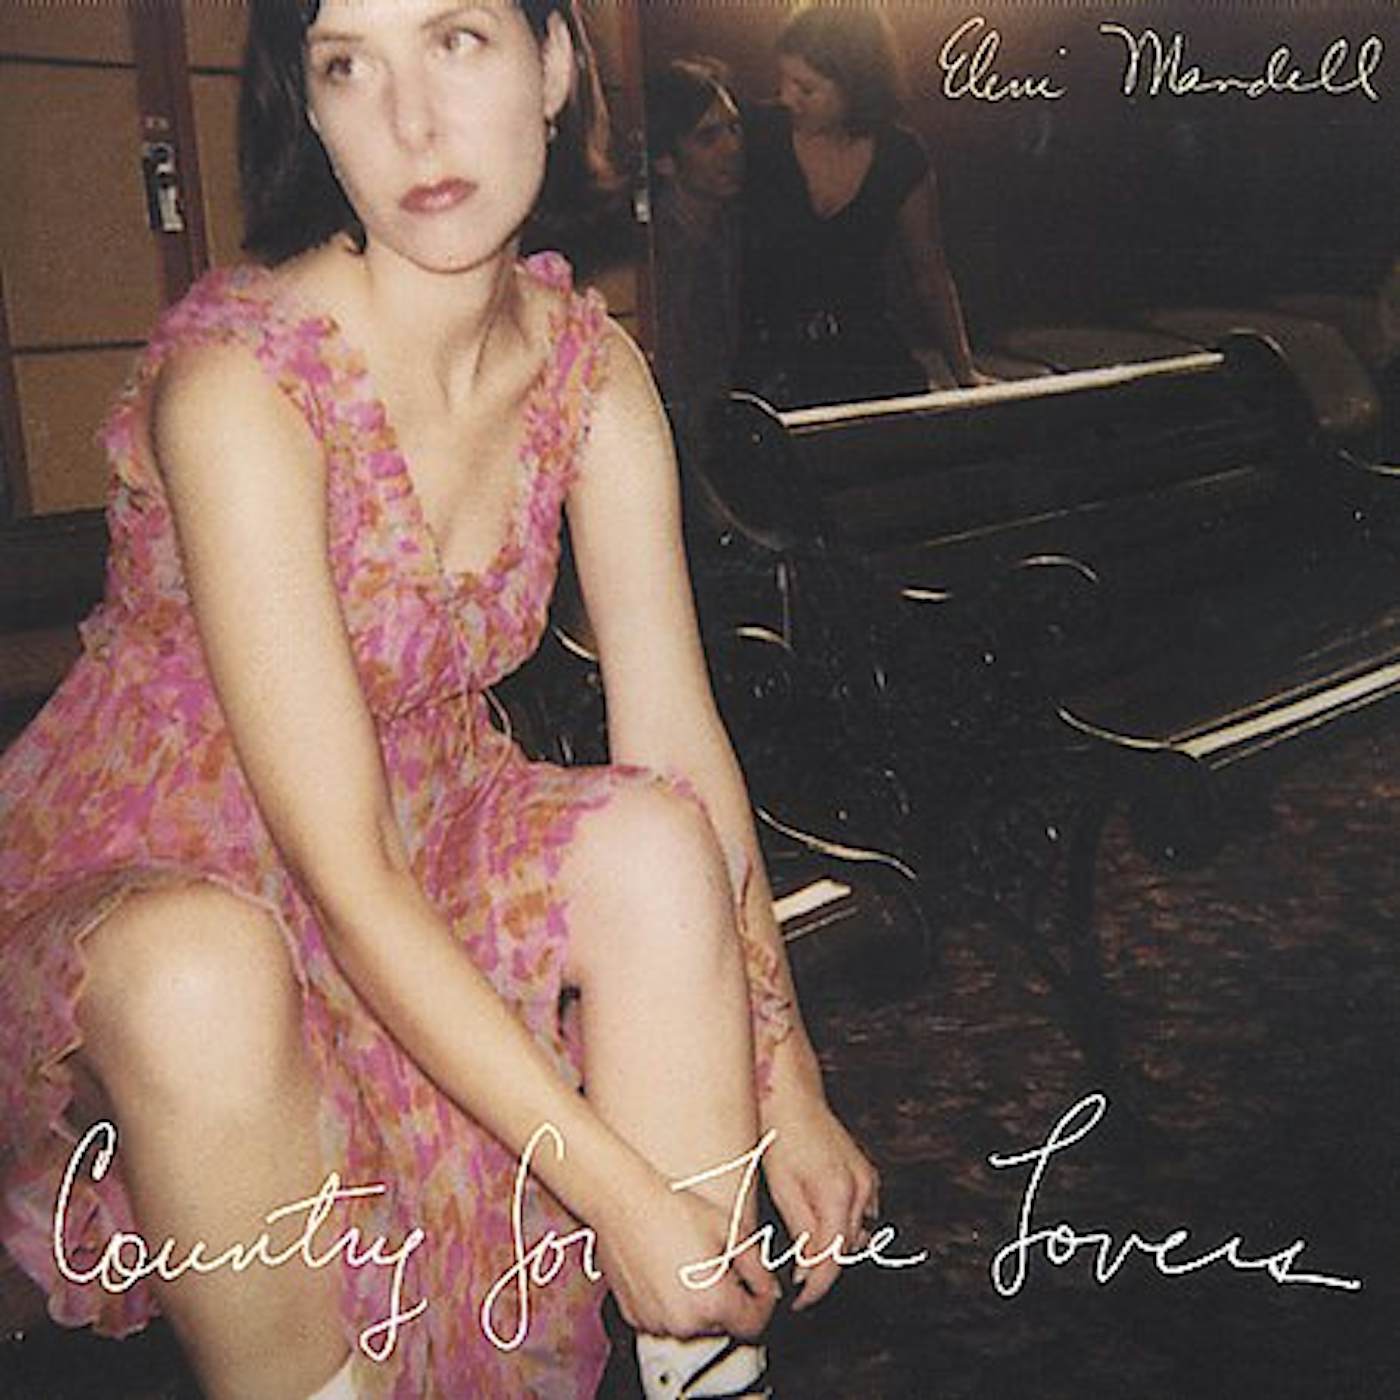 Eleni Mandell COUNTRY FOR TRUE LOVERS CD